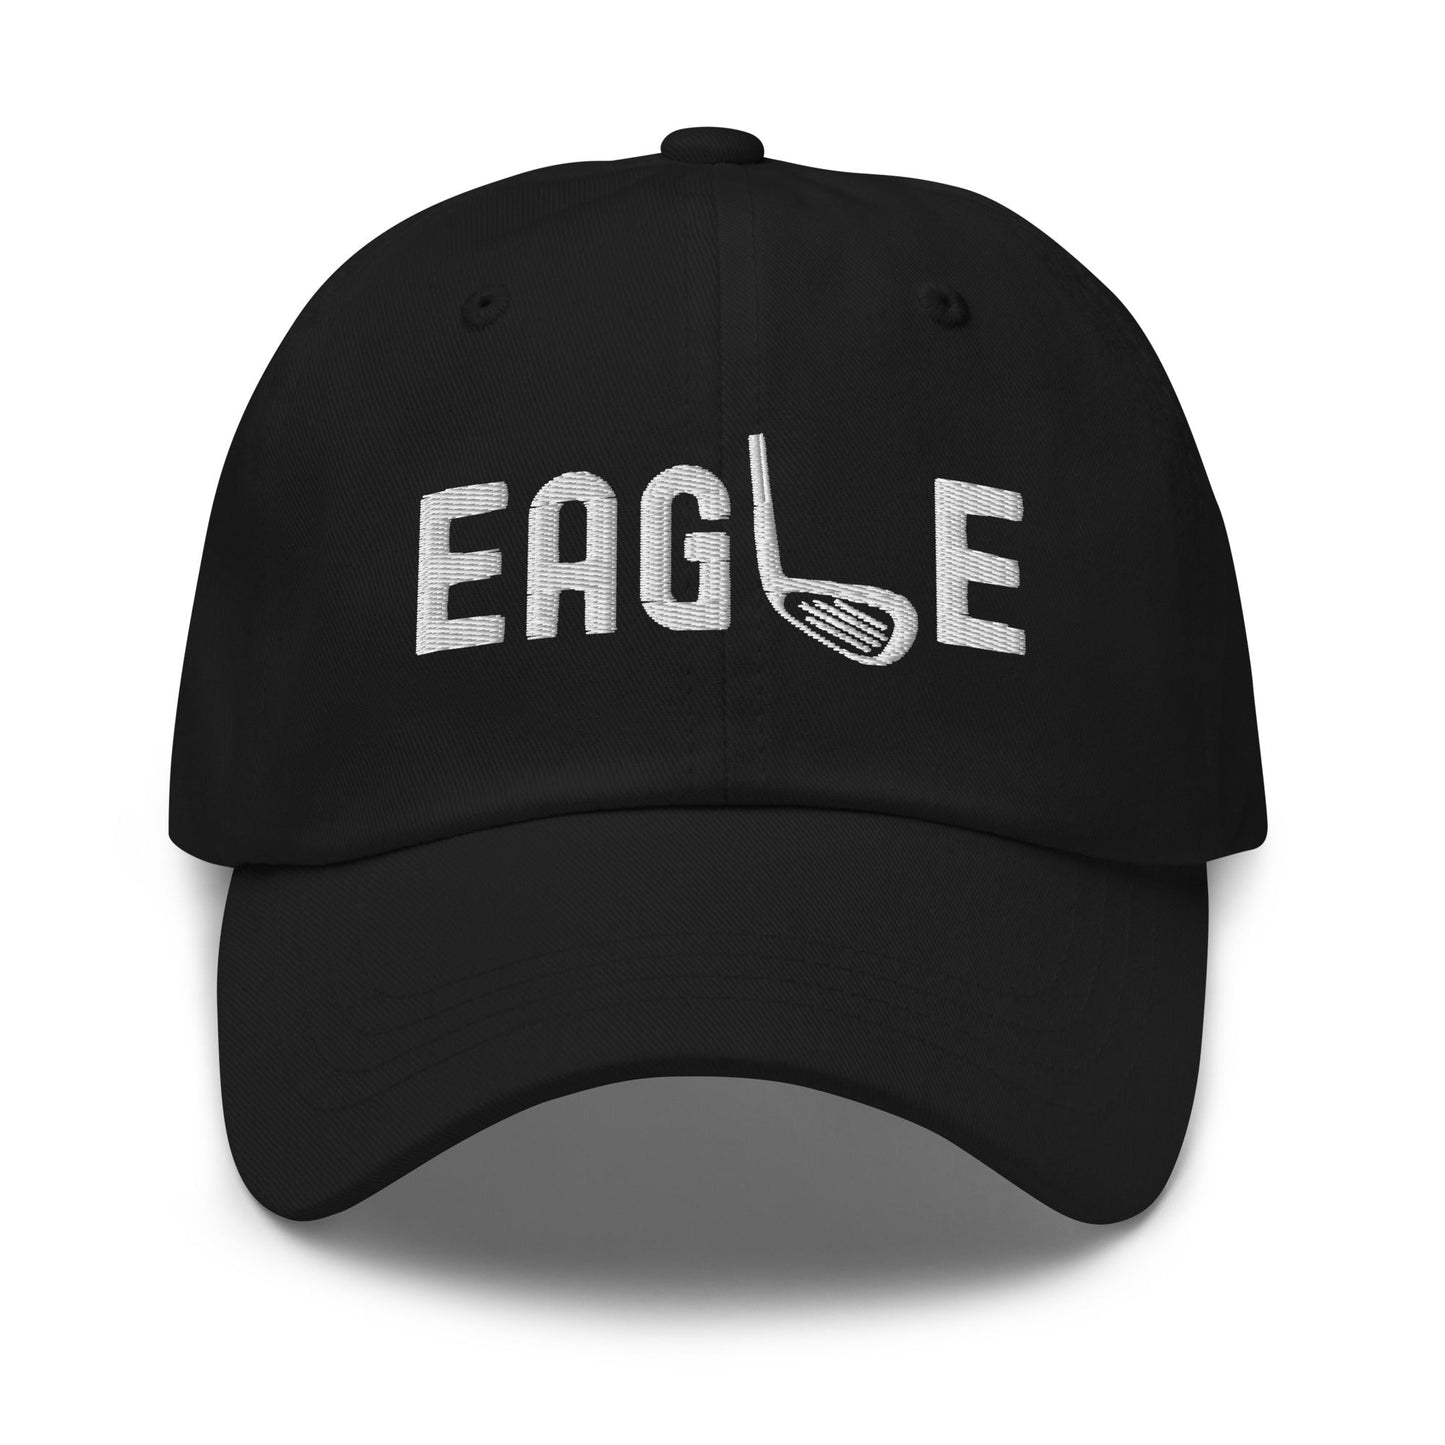 Funny Golfer Gifts  Dad Cap Black Eagle Hat Cap